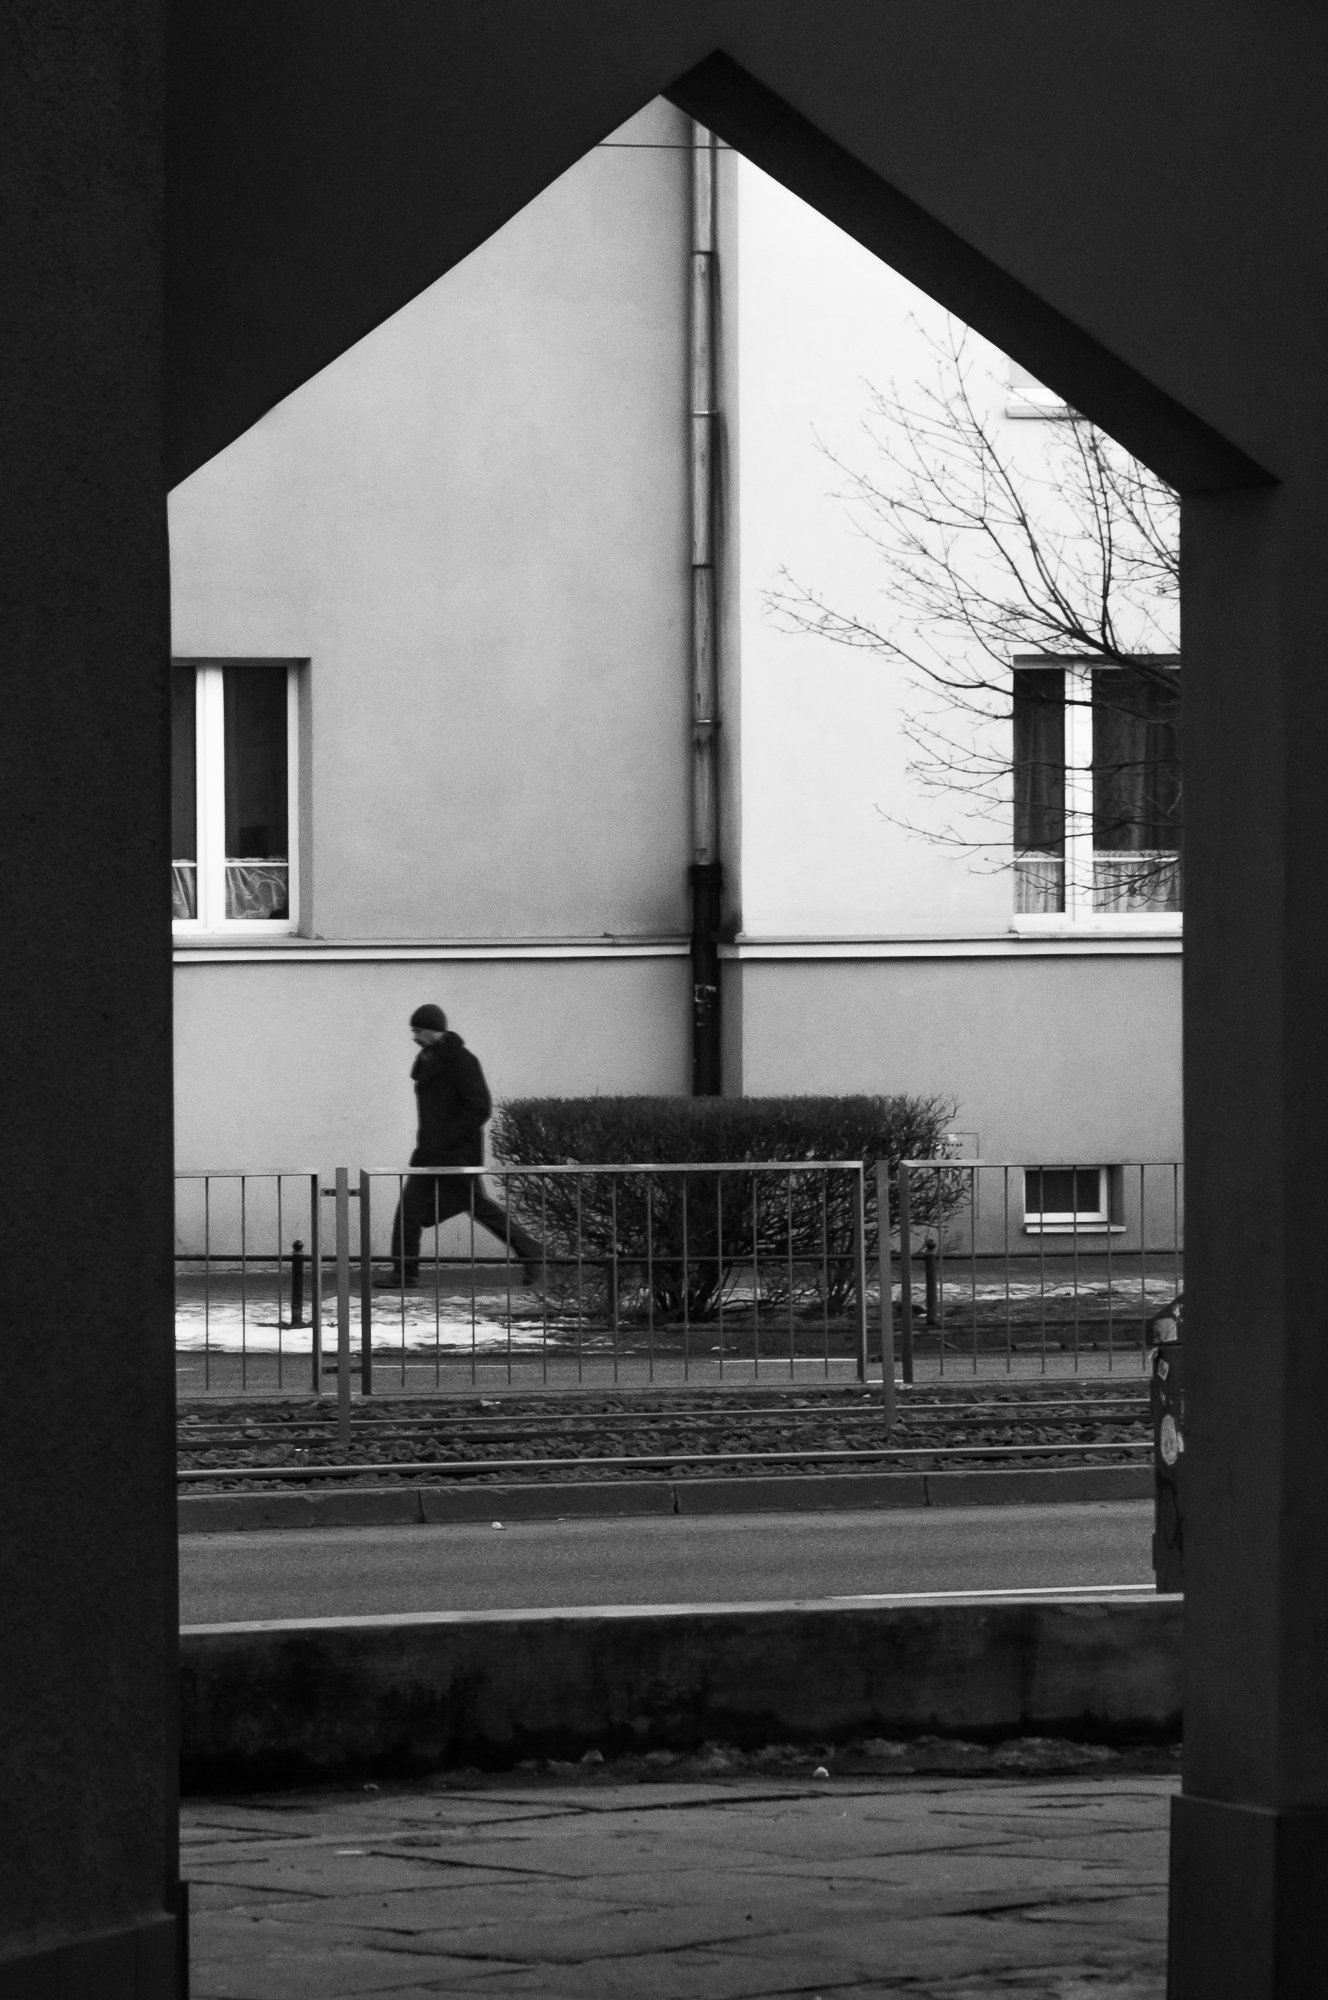 Adam Mazek Photography Warsaw (Warszawa) 2017. Post: "The curiosity of the world." Minimalism. Street photography. Walking man.